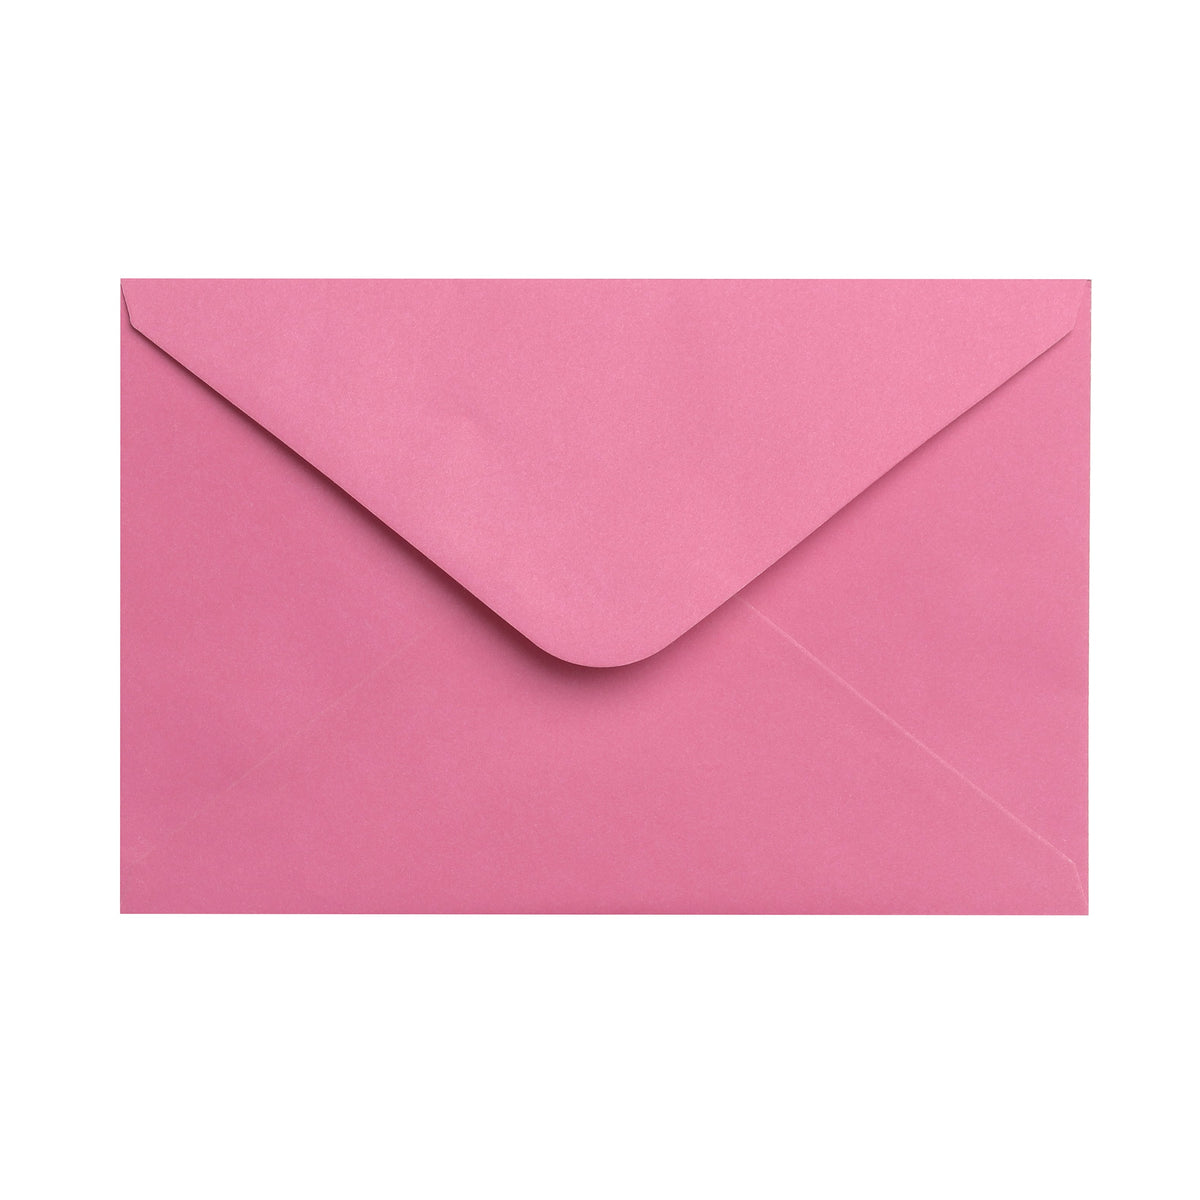 Baronial-Style A9 Envelopes Pink Gartner Studios Envelopes 83813